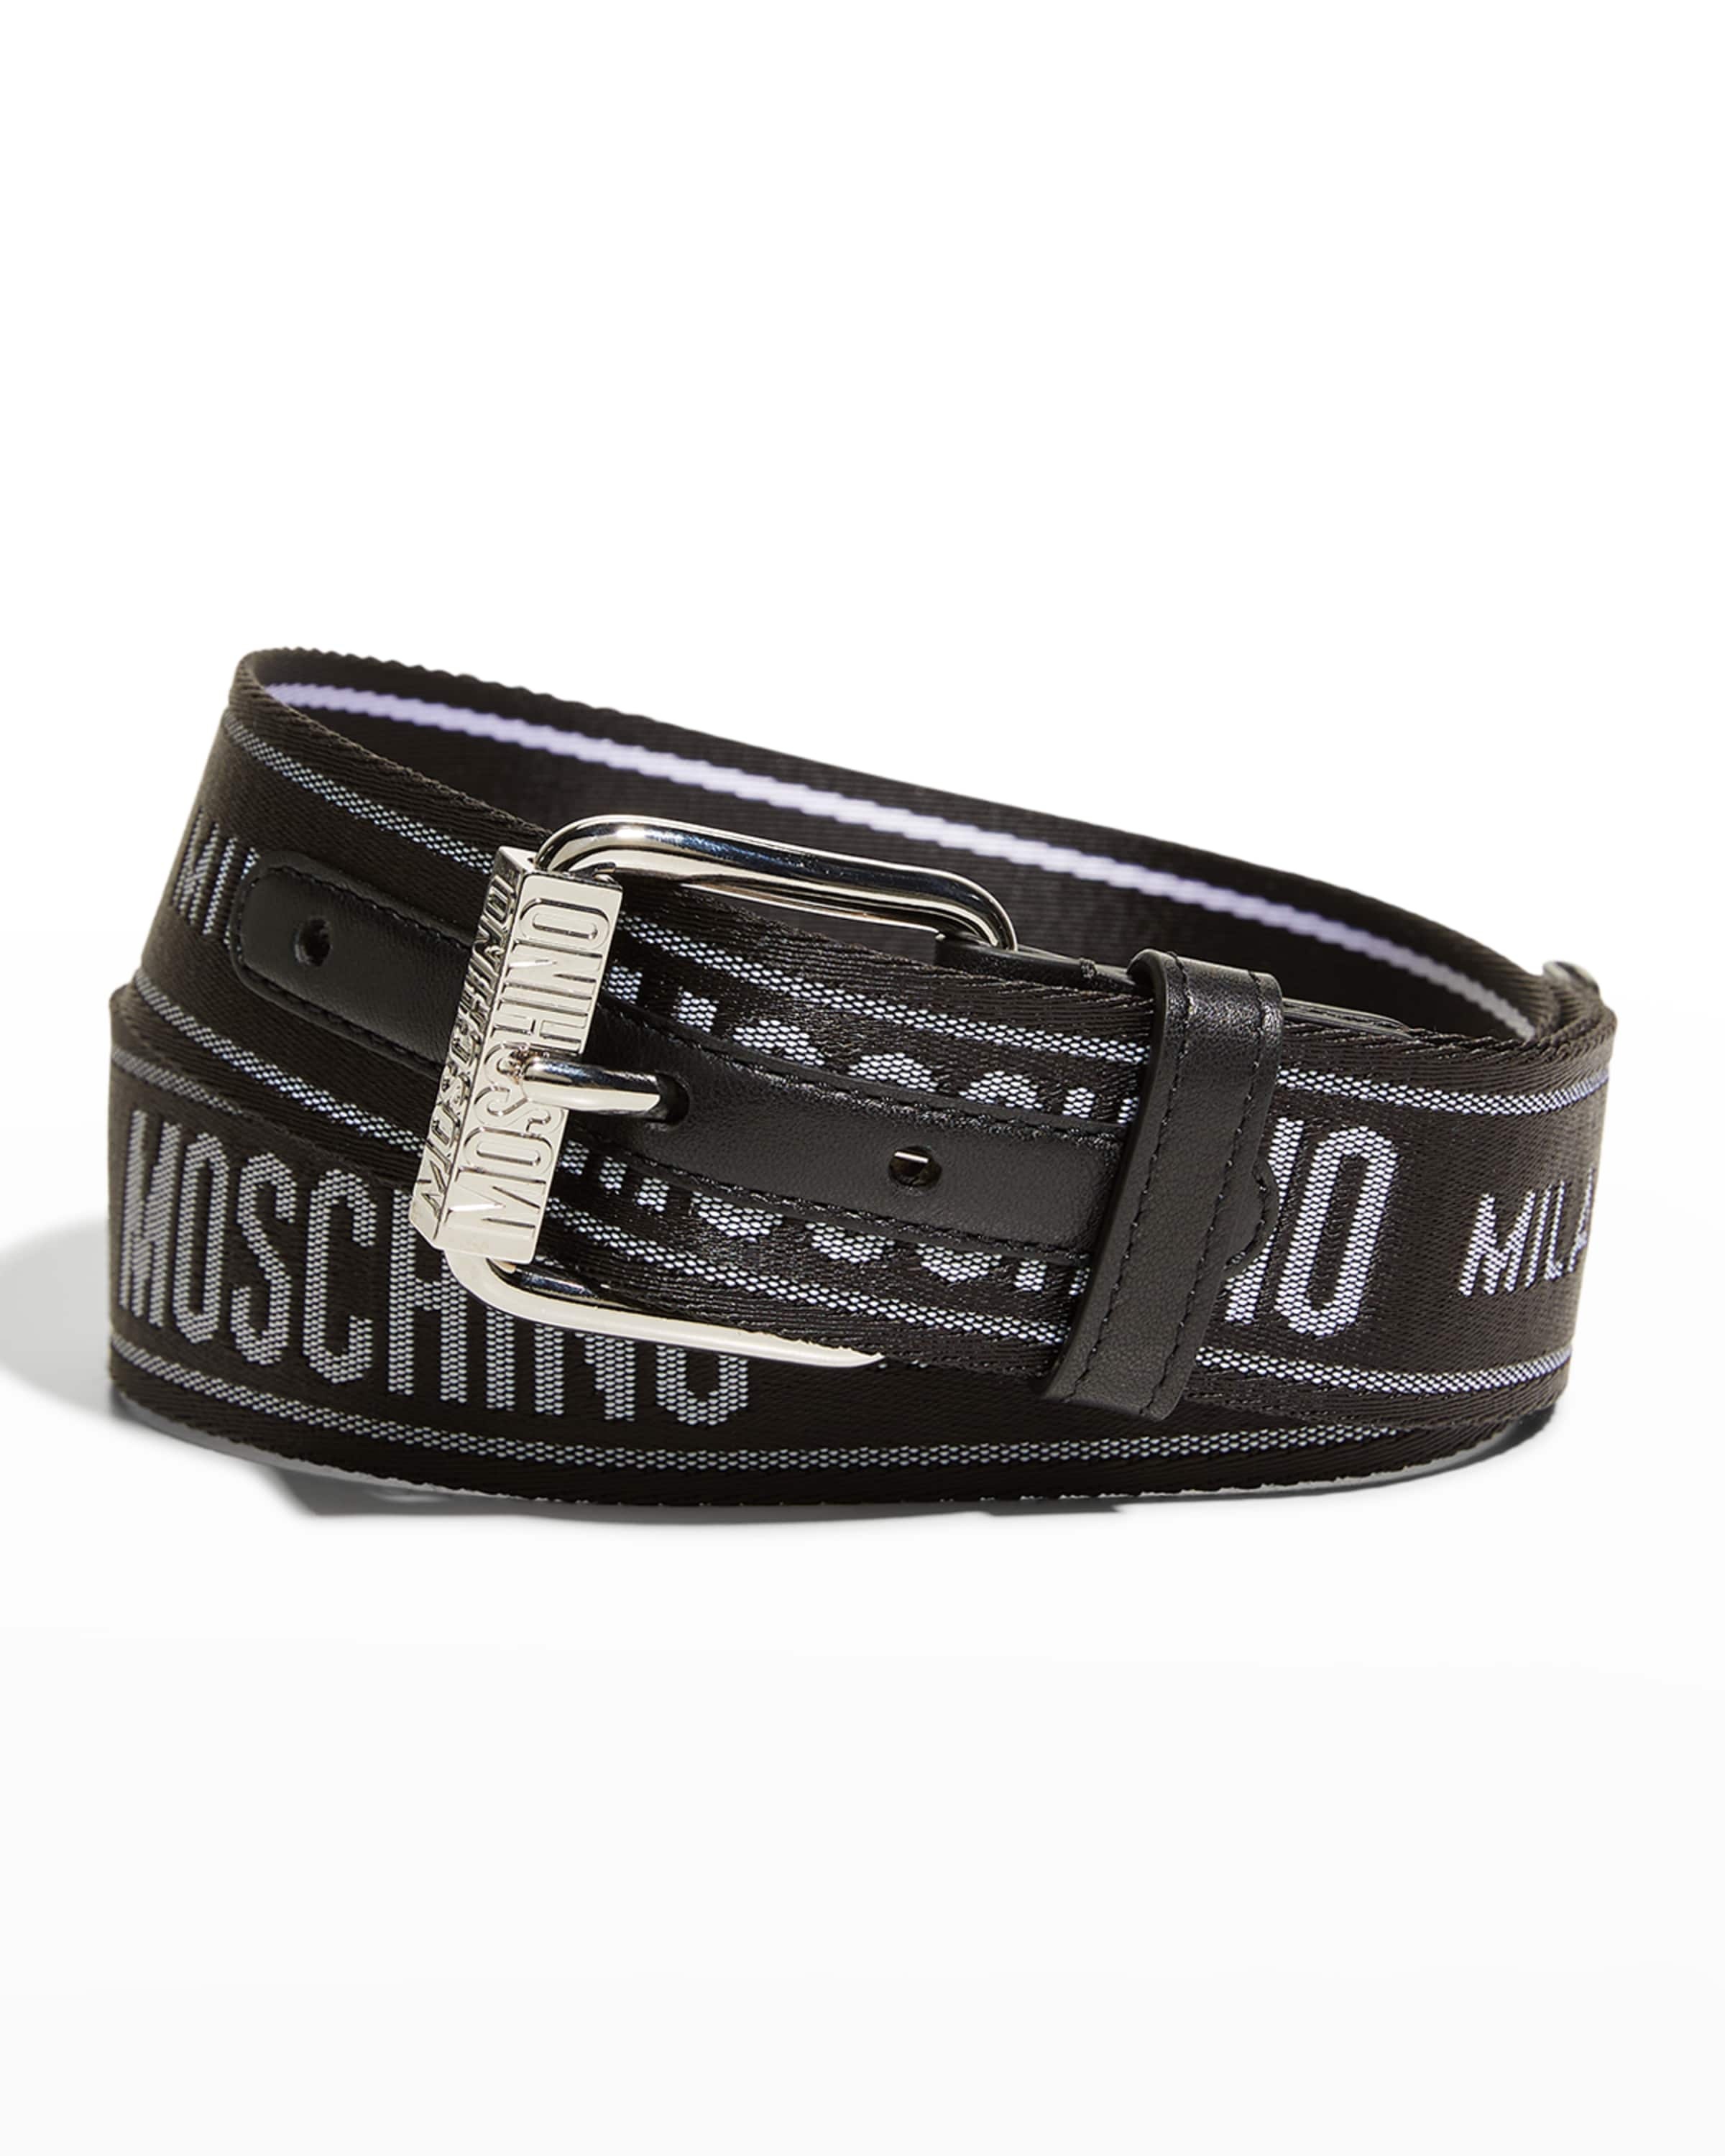 Moschino logo-plaque buckled belt - Black